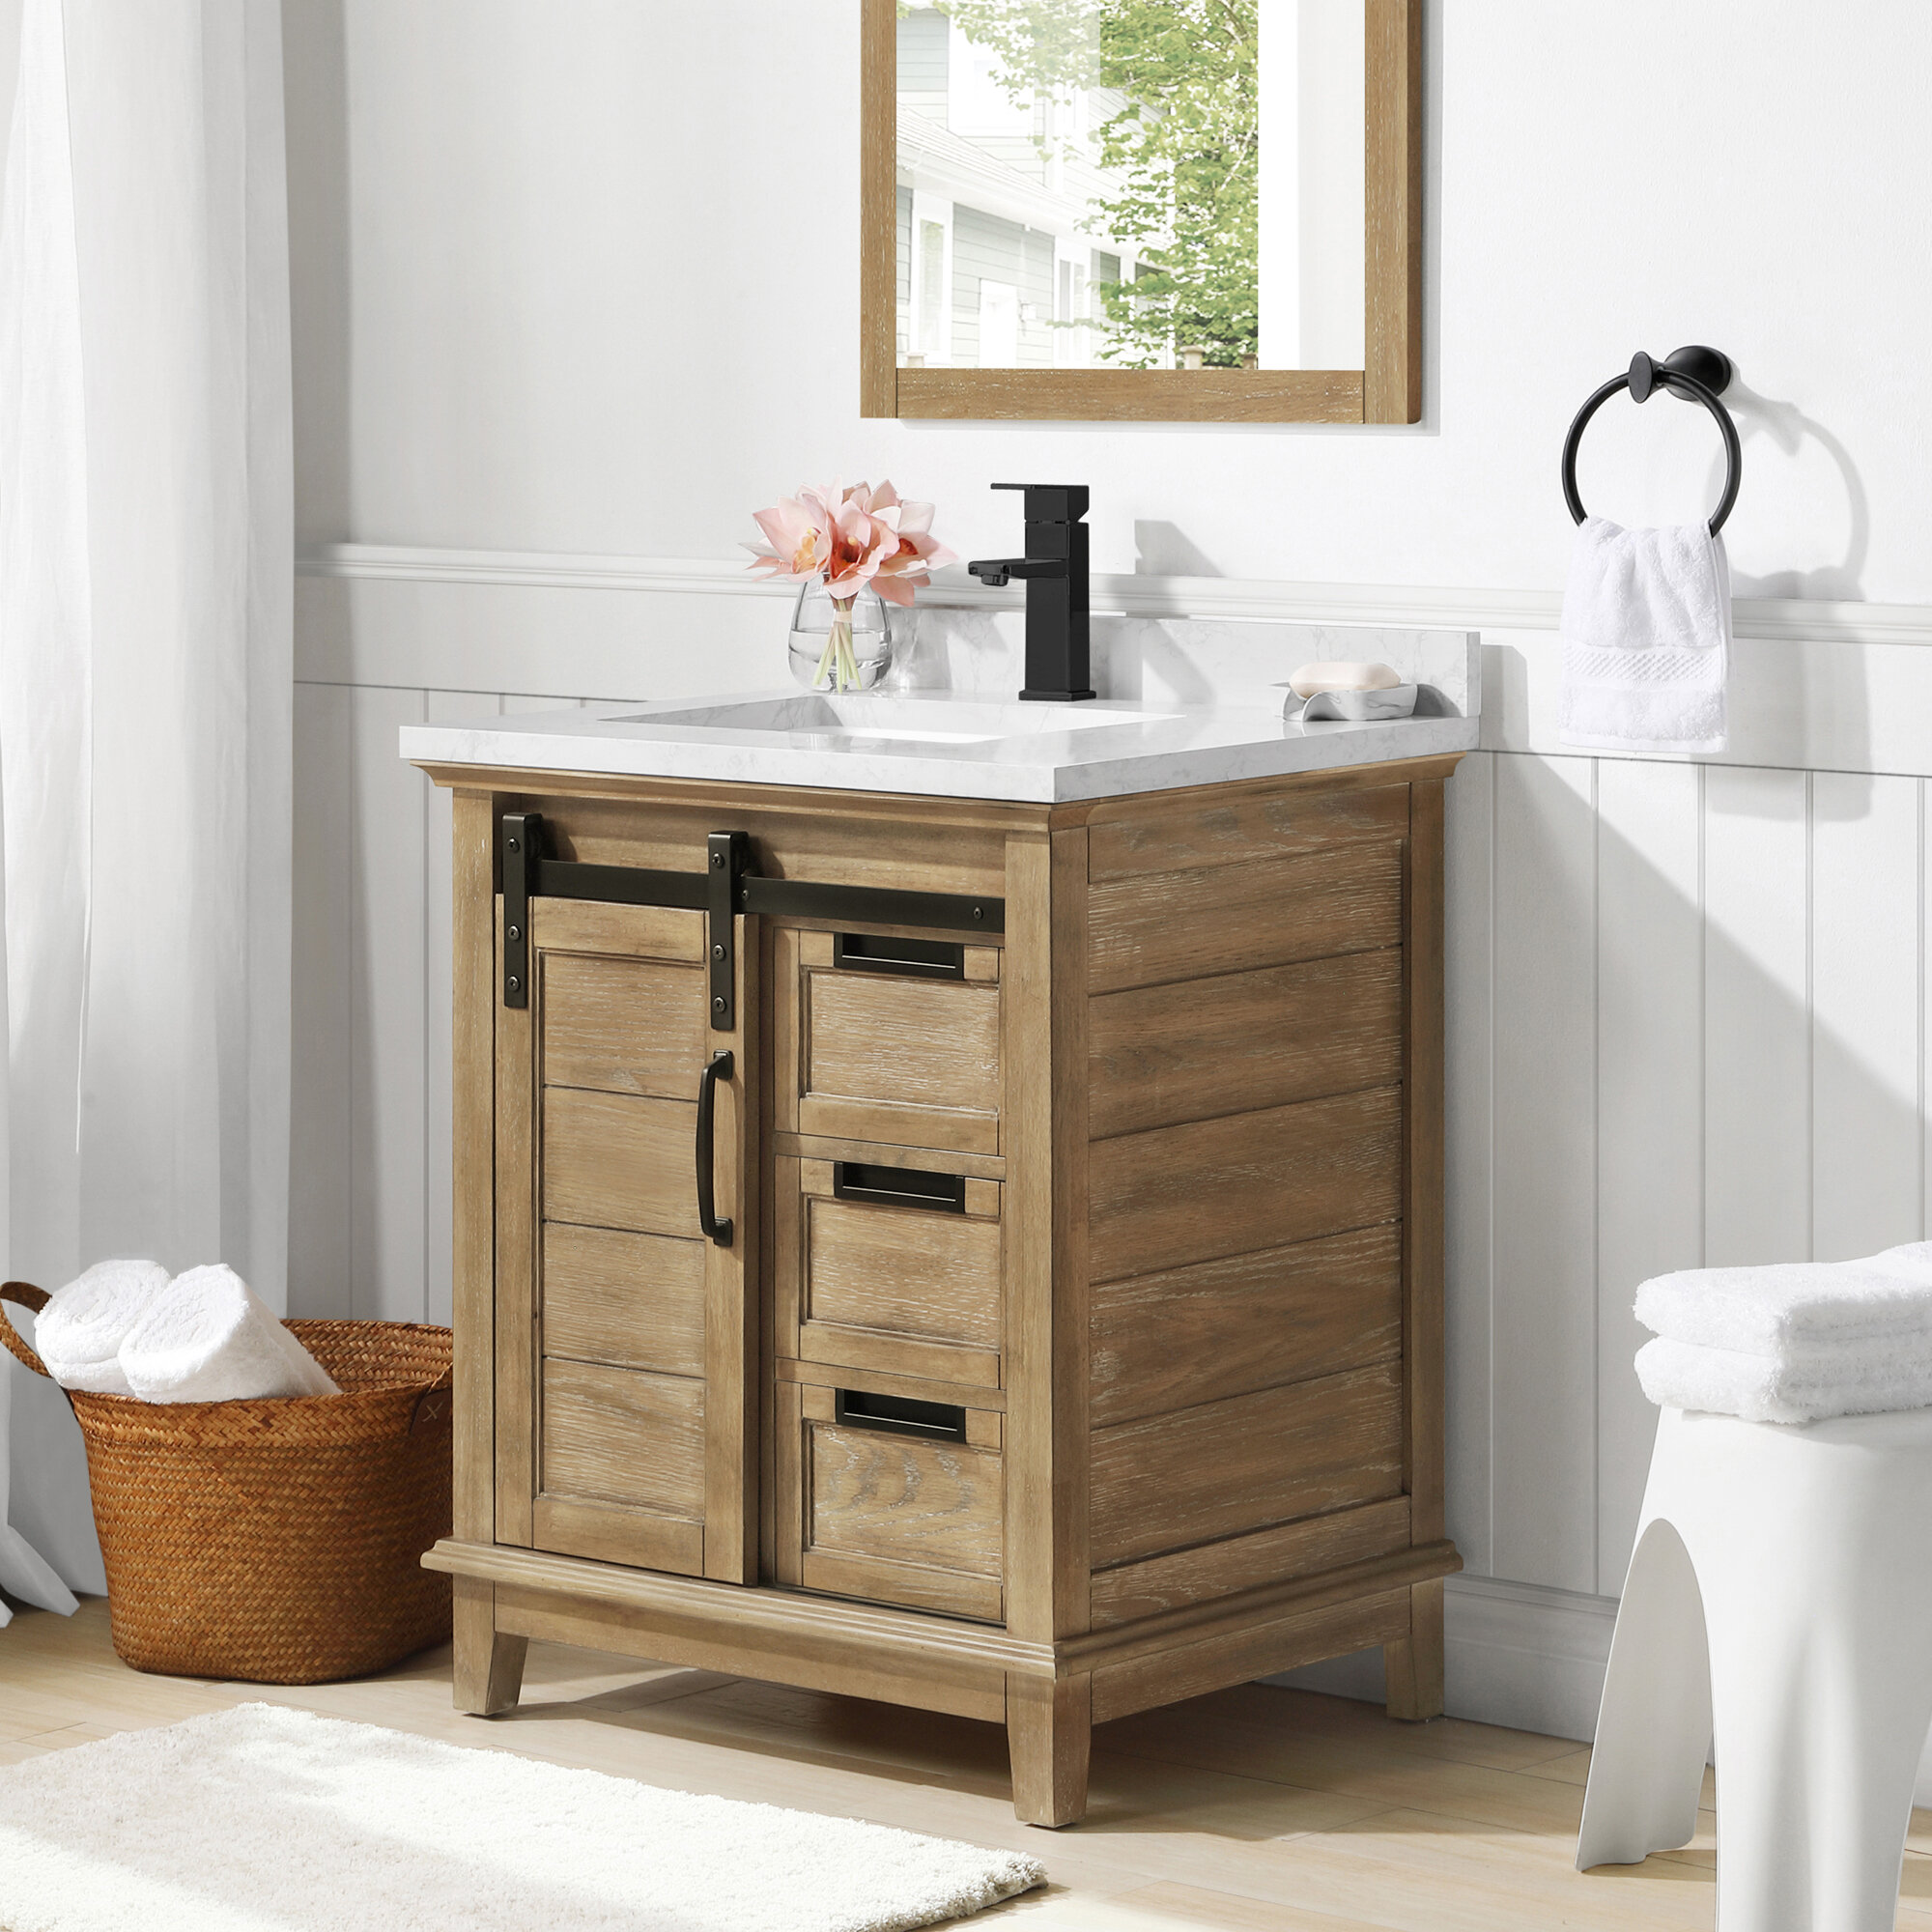 Ove Decors Edenderry 30 Single Bathroom Vanity Reviews Wayfair